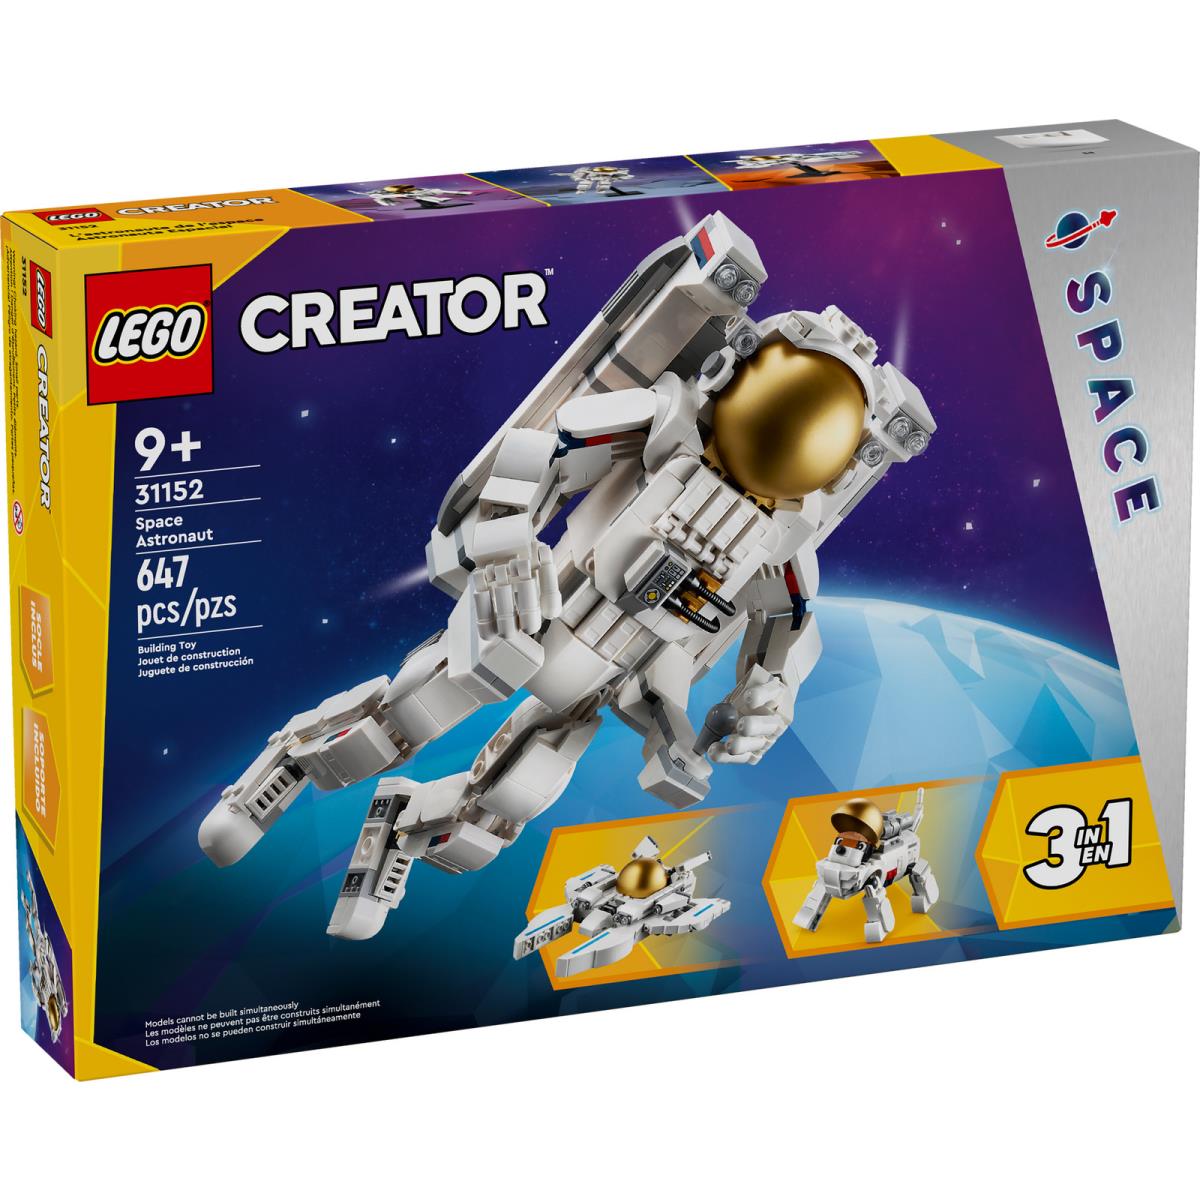 Lego Creator 3in1 Space Astronaut 31152